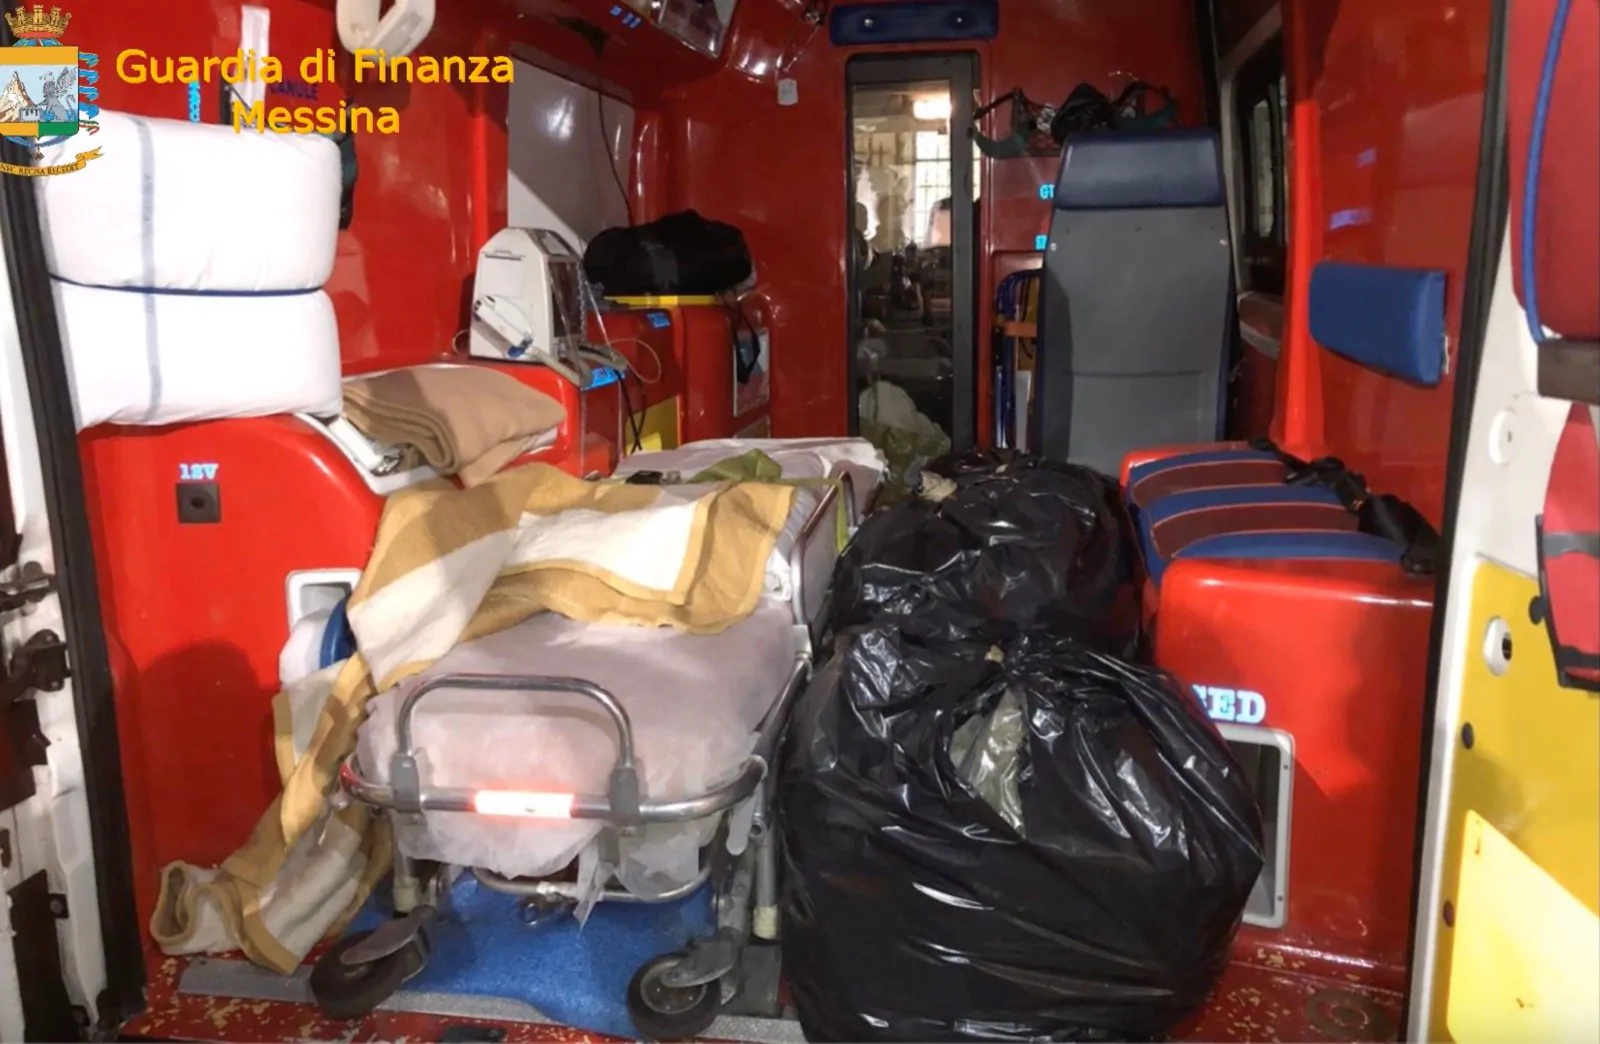 Messina, 30 kg di marijuana in un'ambulanza